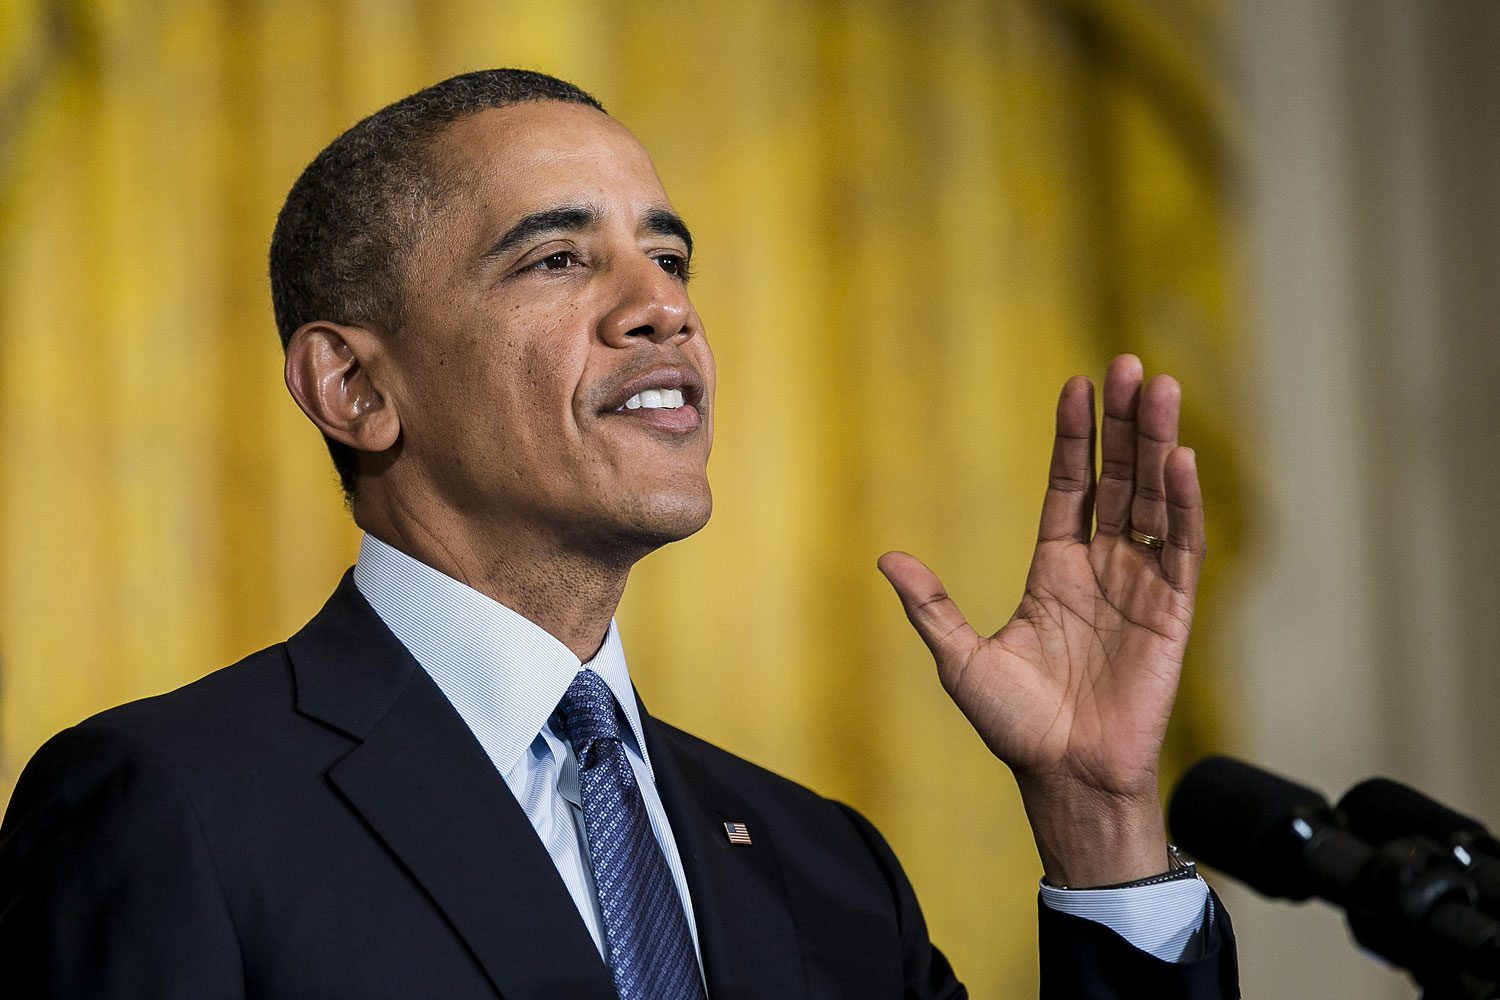 President Barack Obama in Washington, D.C. on March 13, 2014.